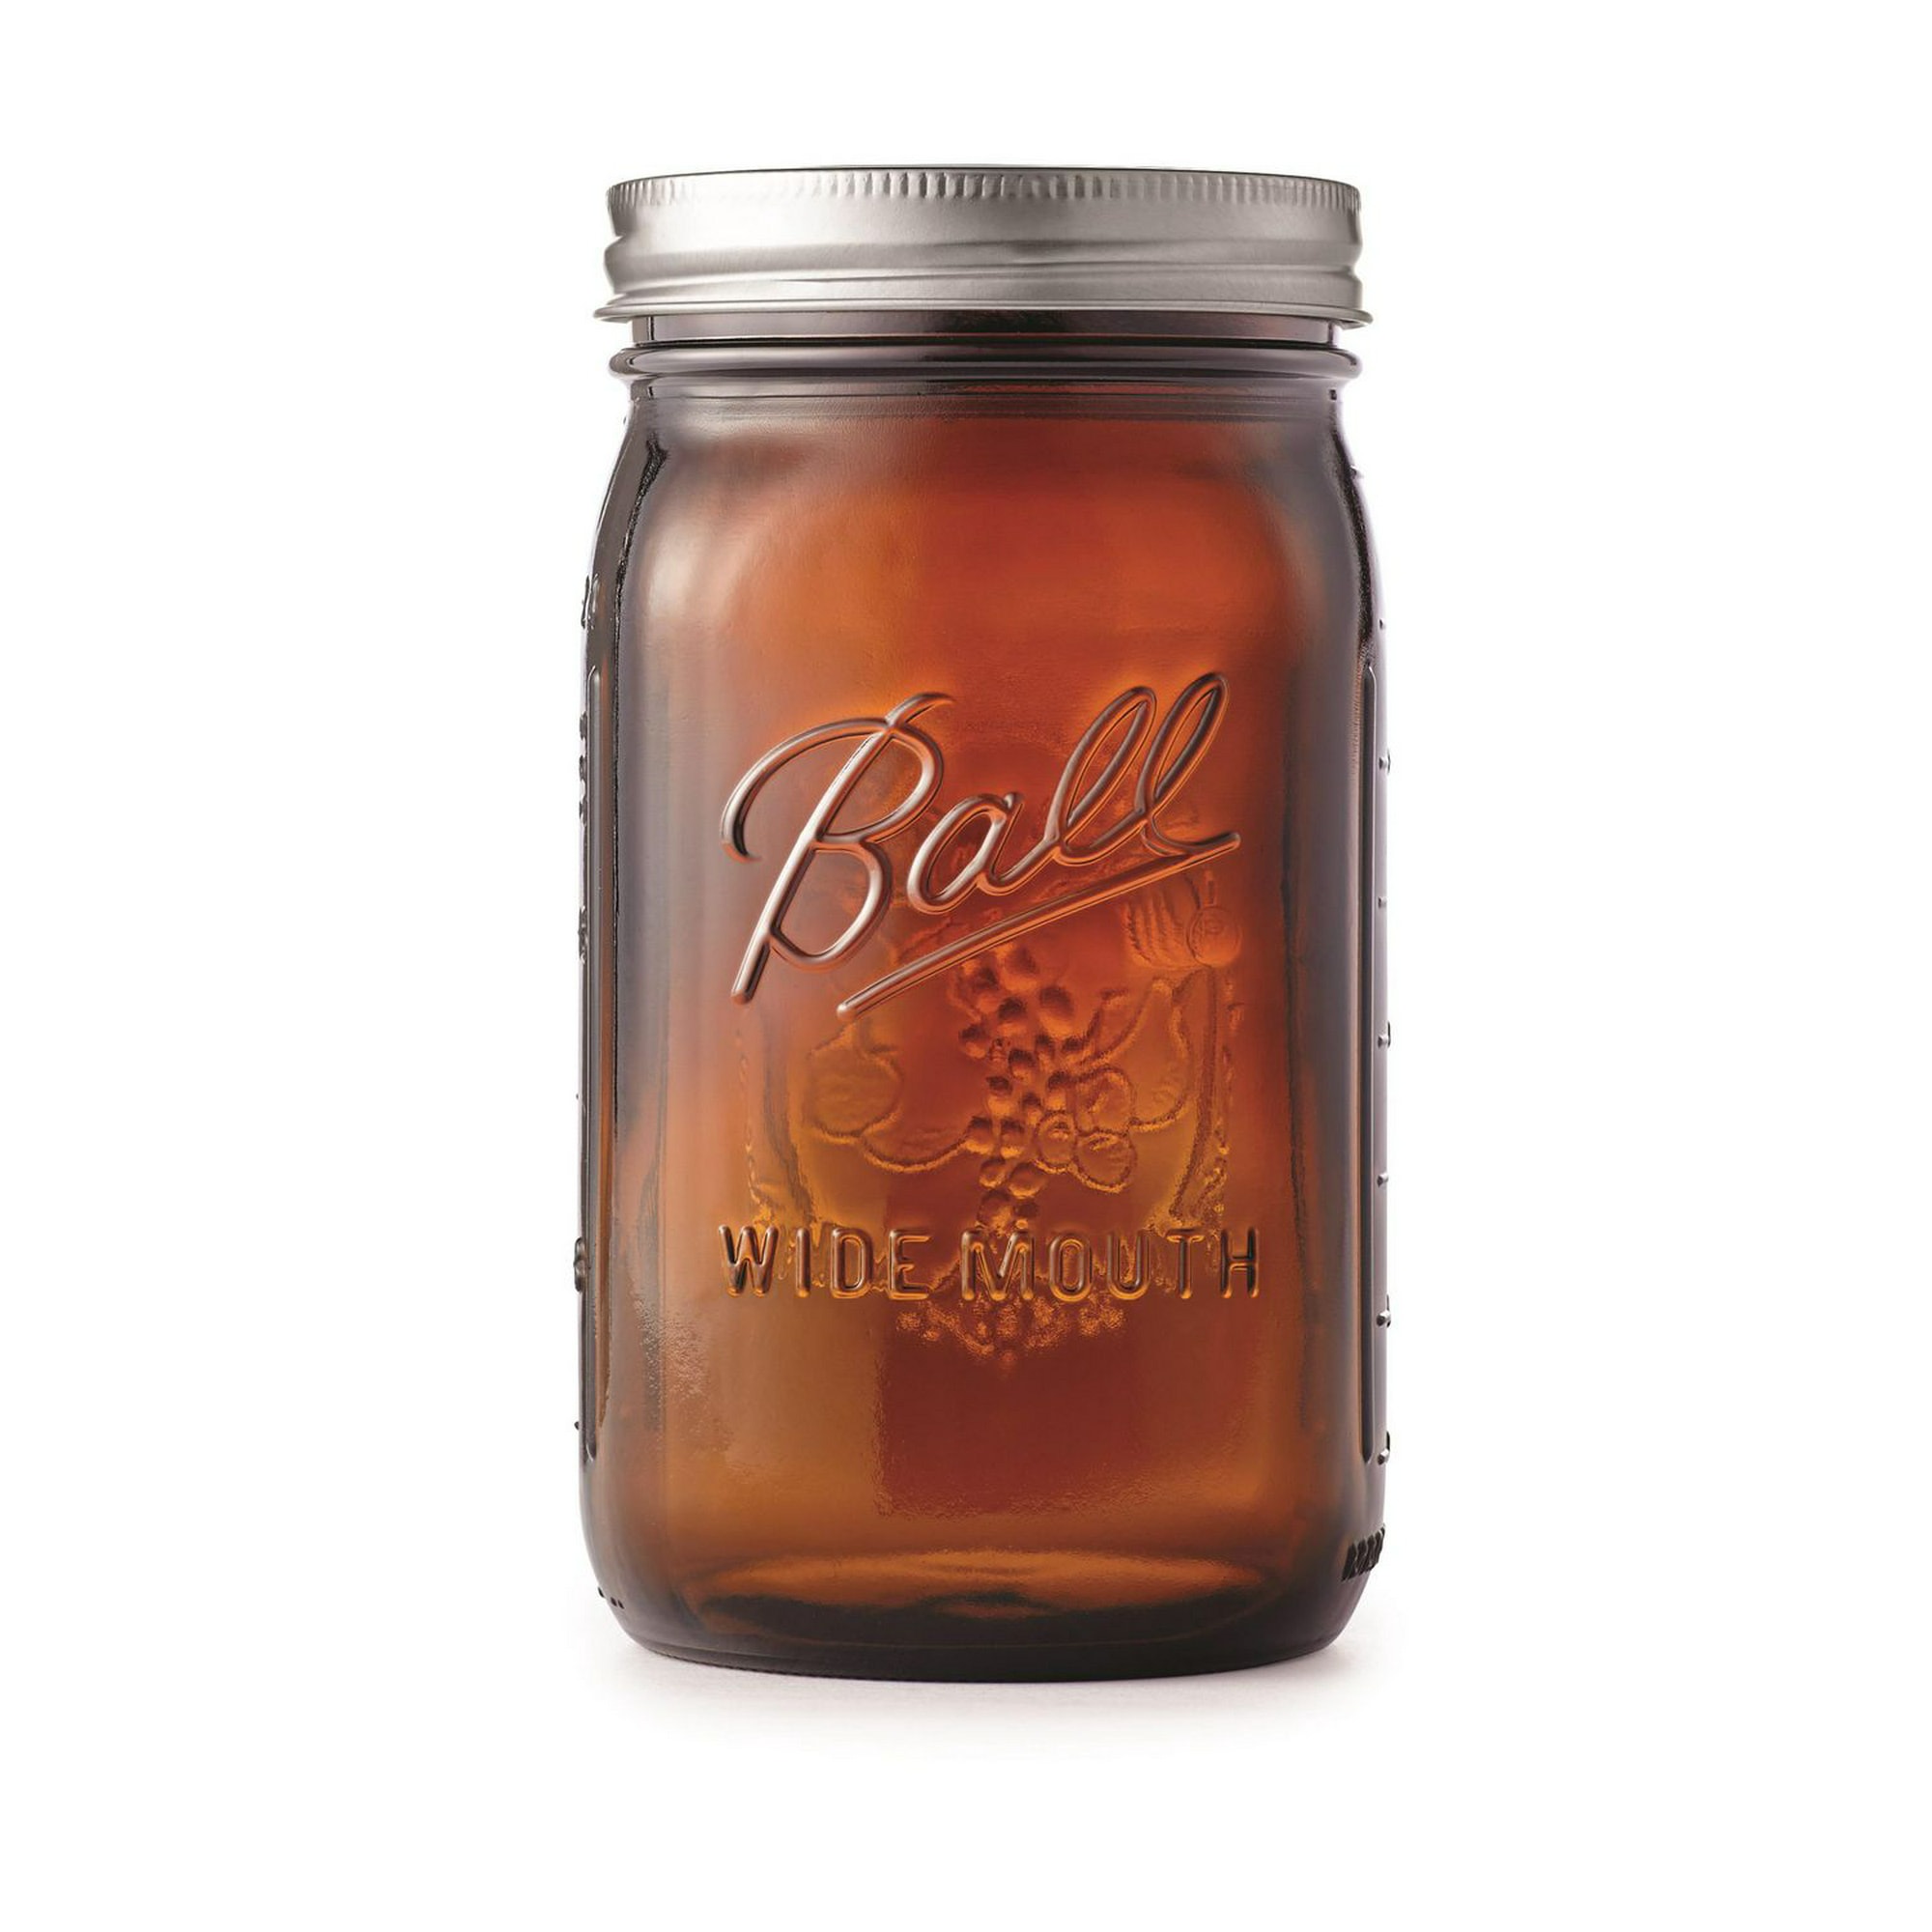 Amber Wide-Mouth Glass Jars - 8 oz S-20591 - Uline